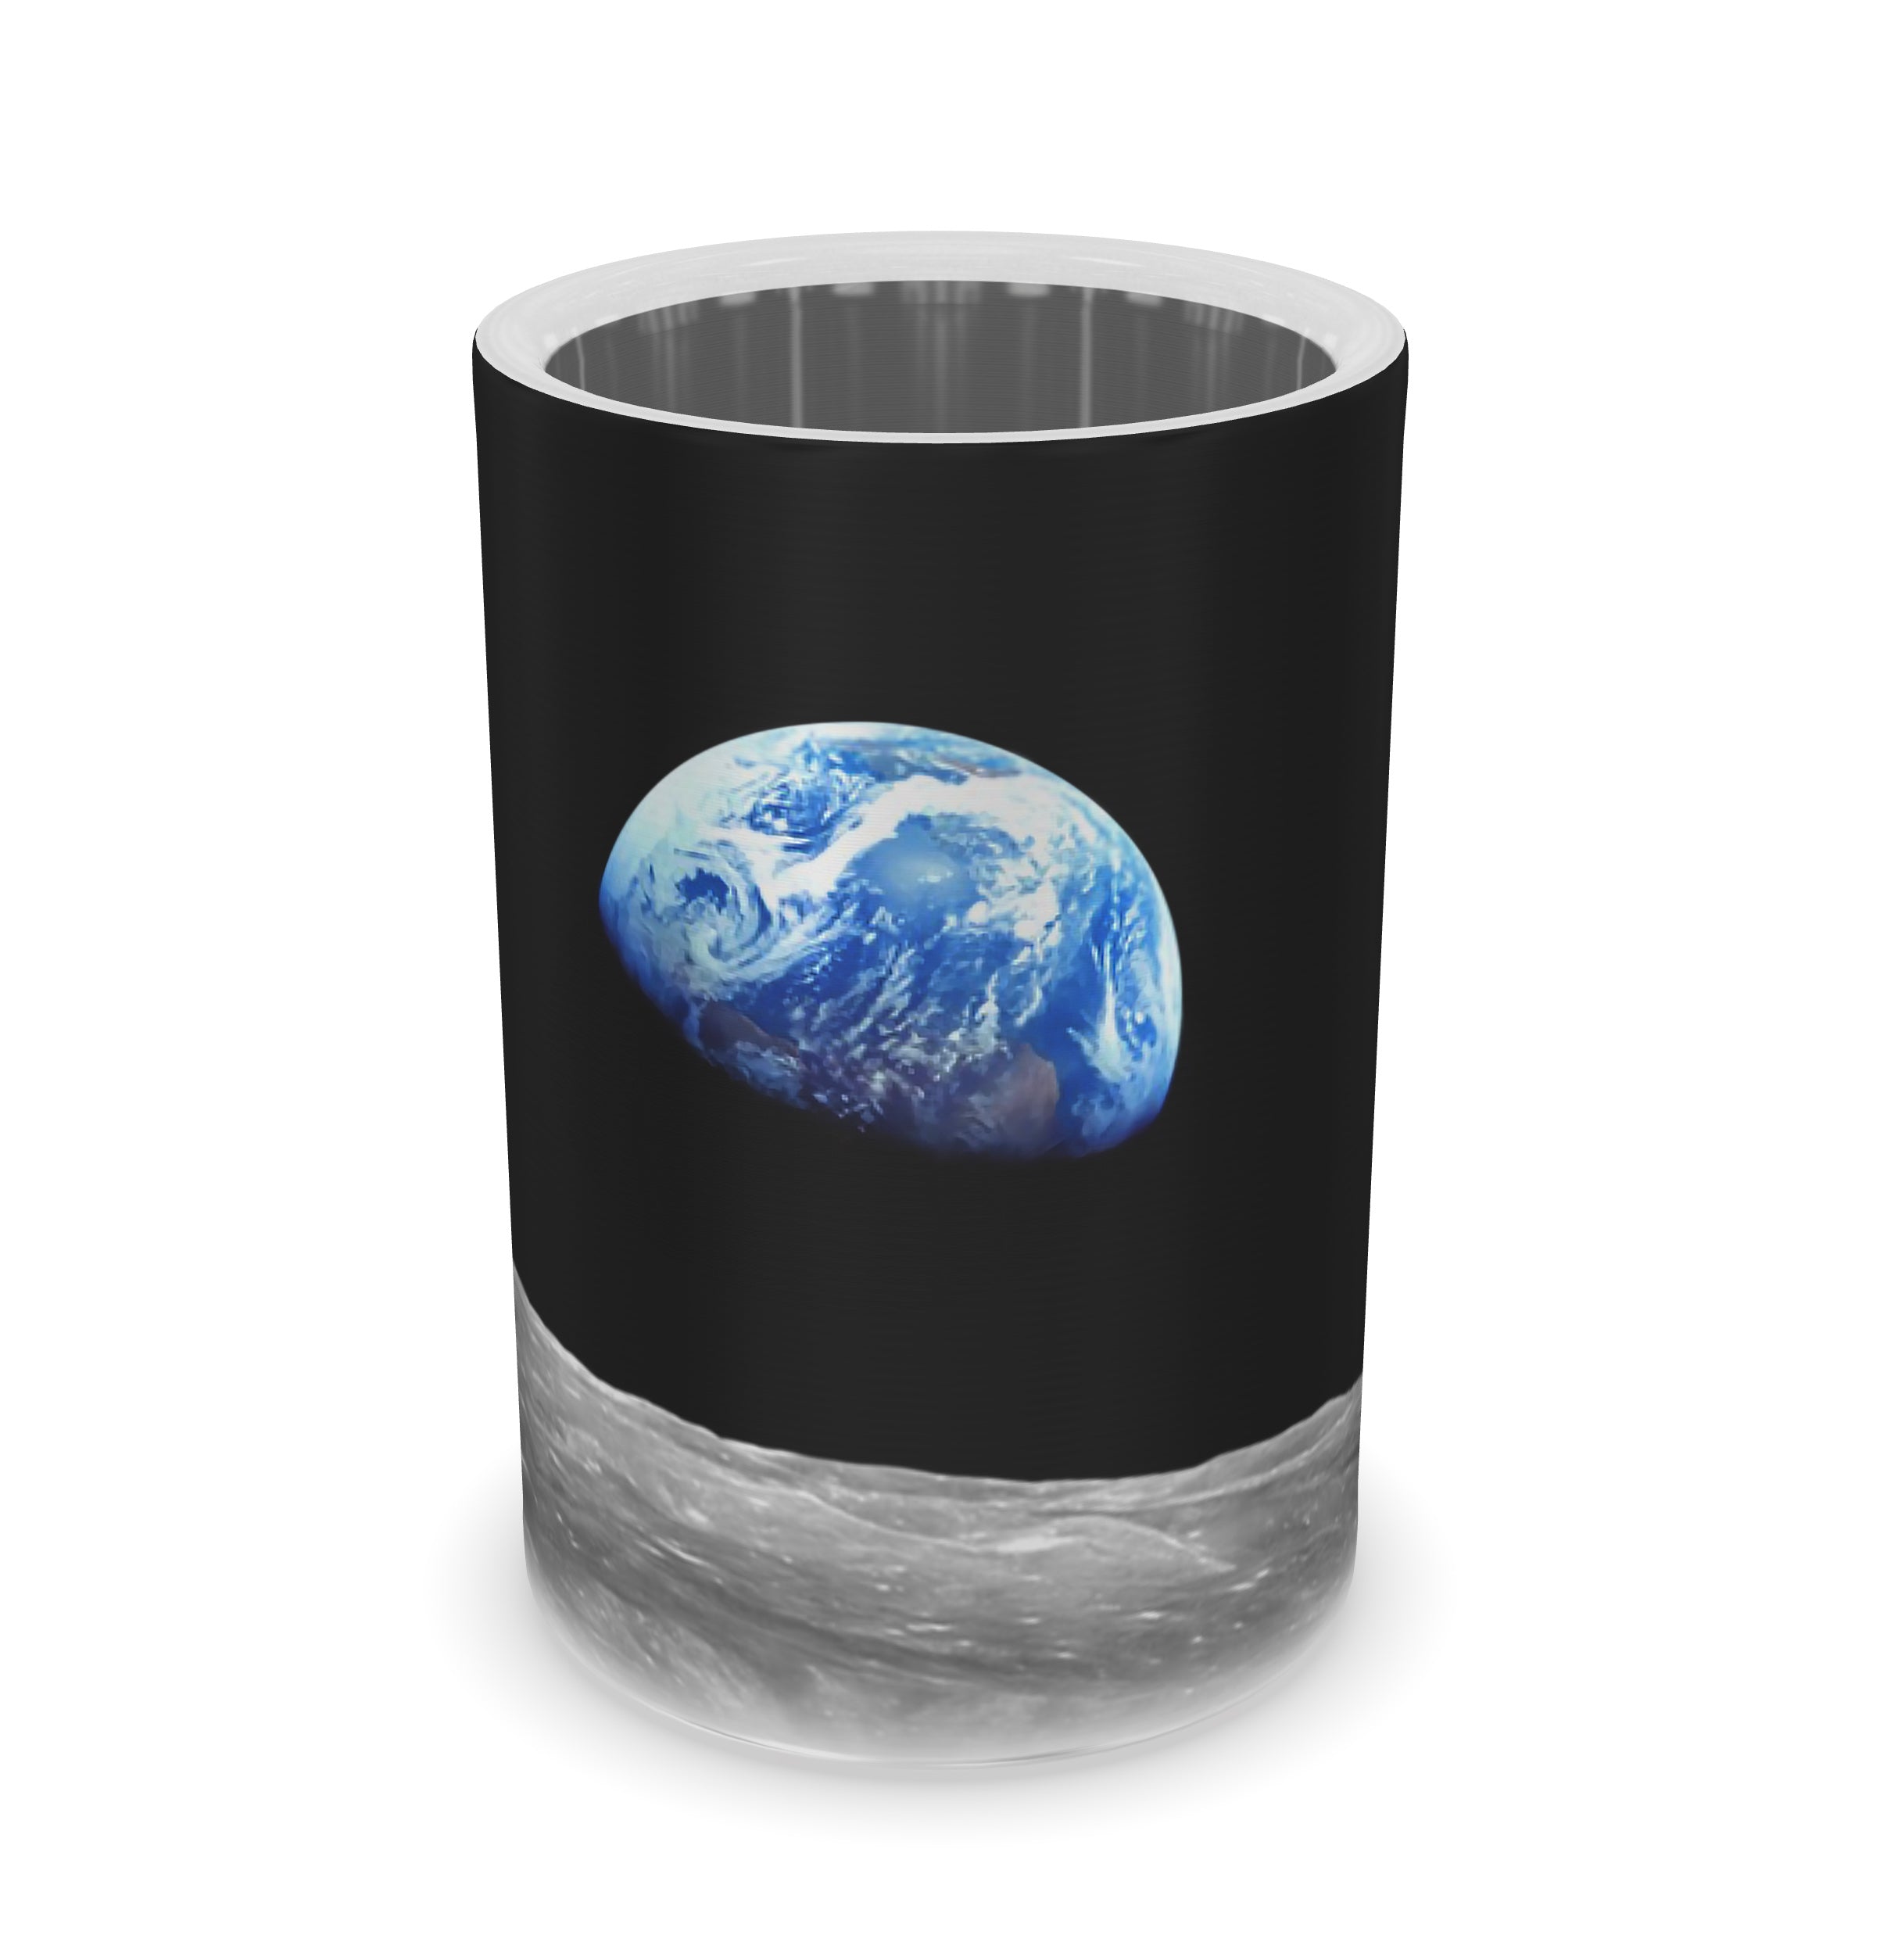 Earthrise 2.0 - Iconic Photo Wine Bottle Cooler - 1